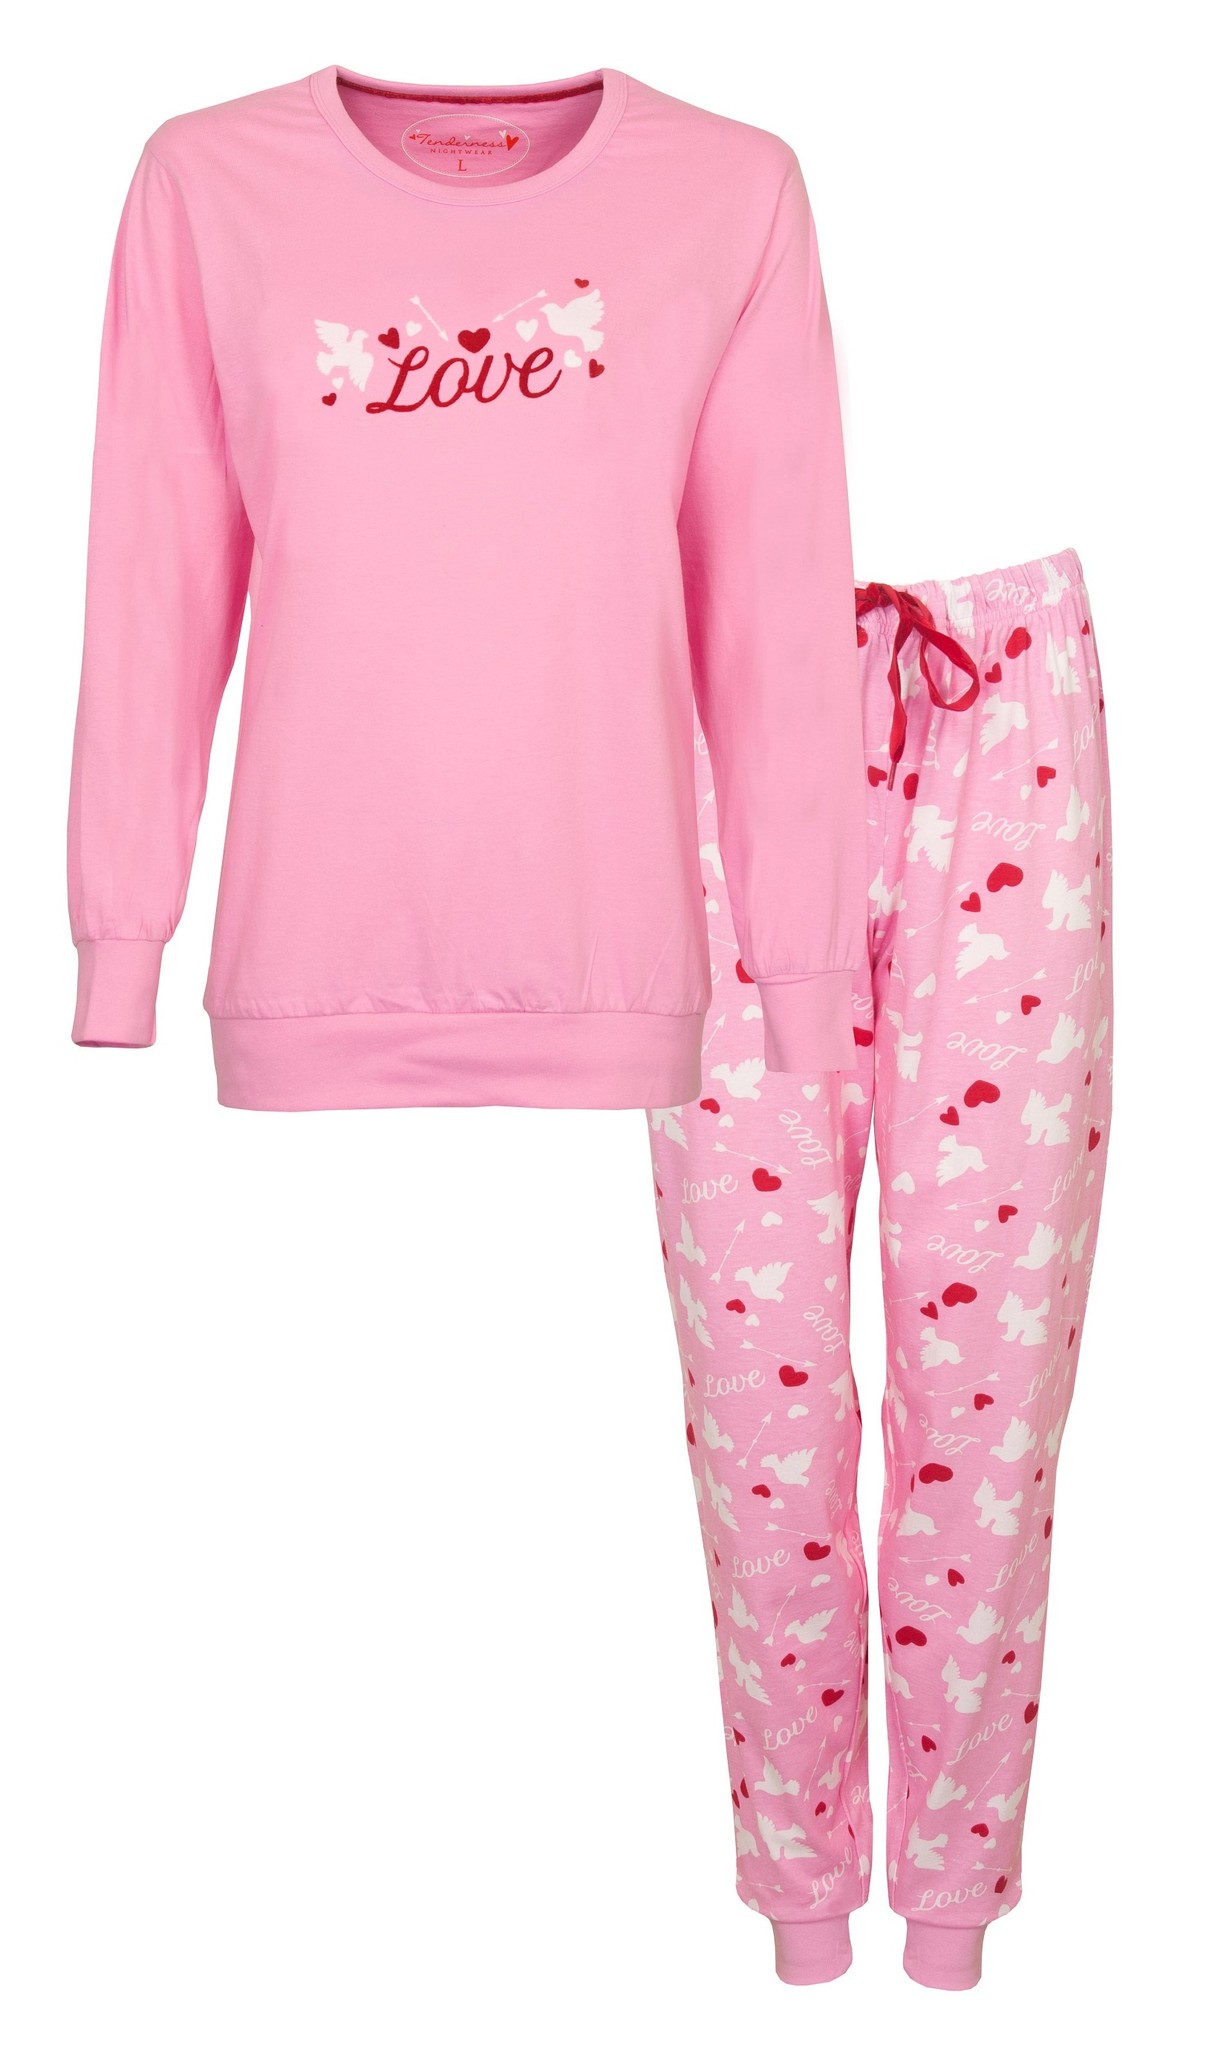 Bowling Besparing De kerk Tenderness Dames Pyjama Roze TEPYD1121A | Pyjamaonline